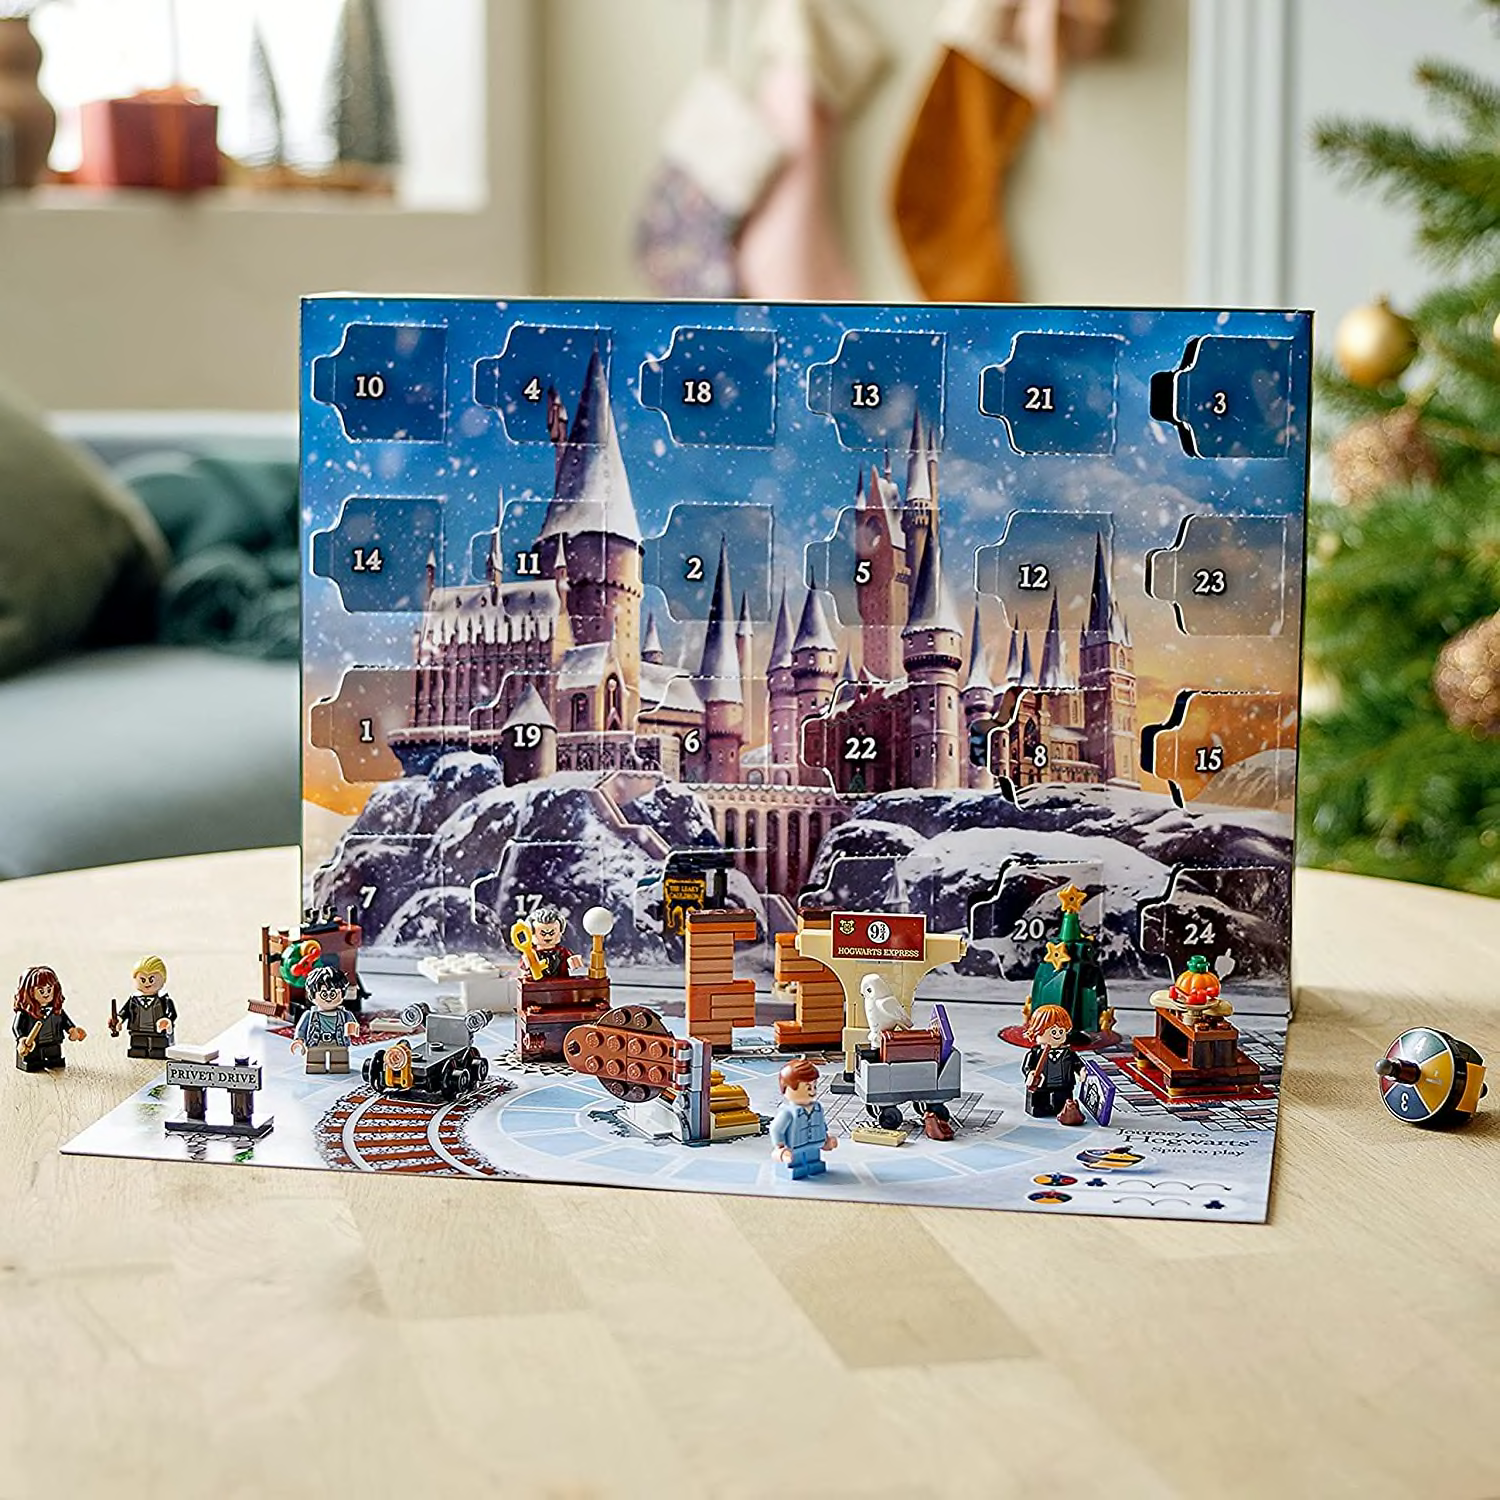 Enjoy LEGO's Marvel, Star Wars, and Harry Potter Advent calendars